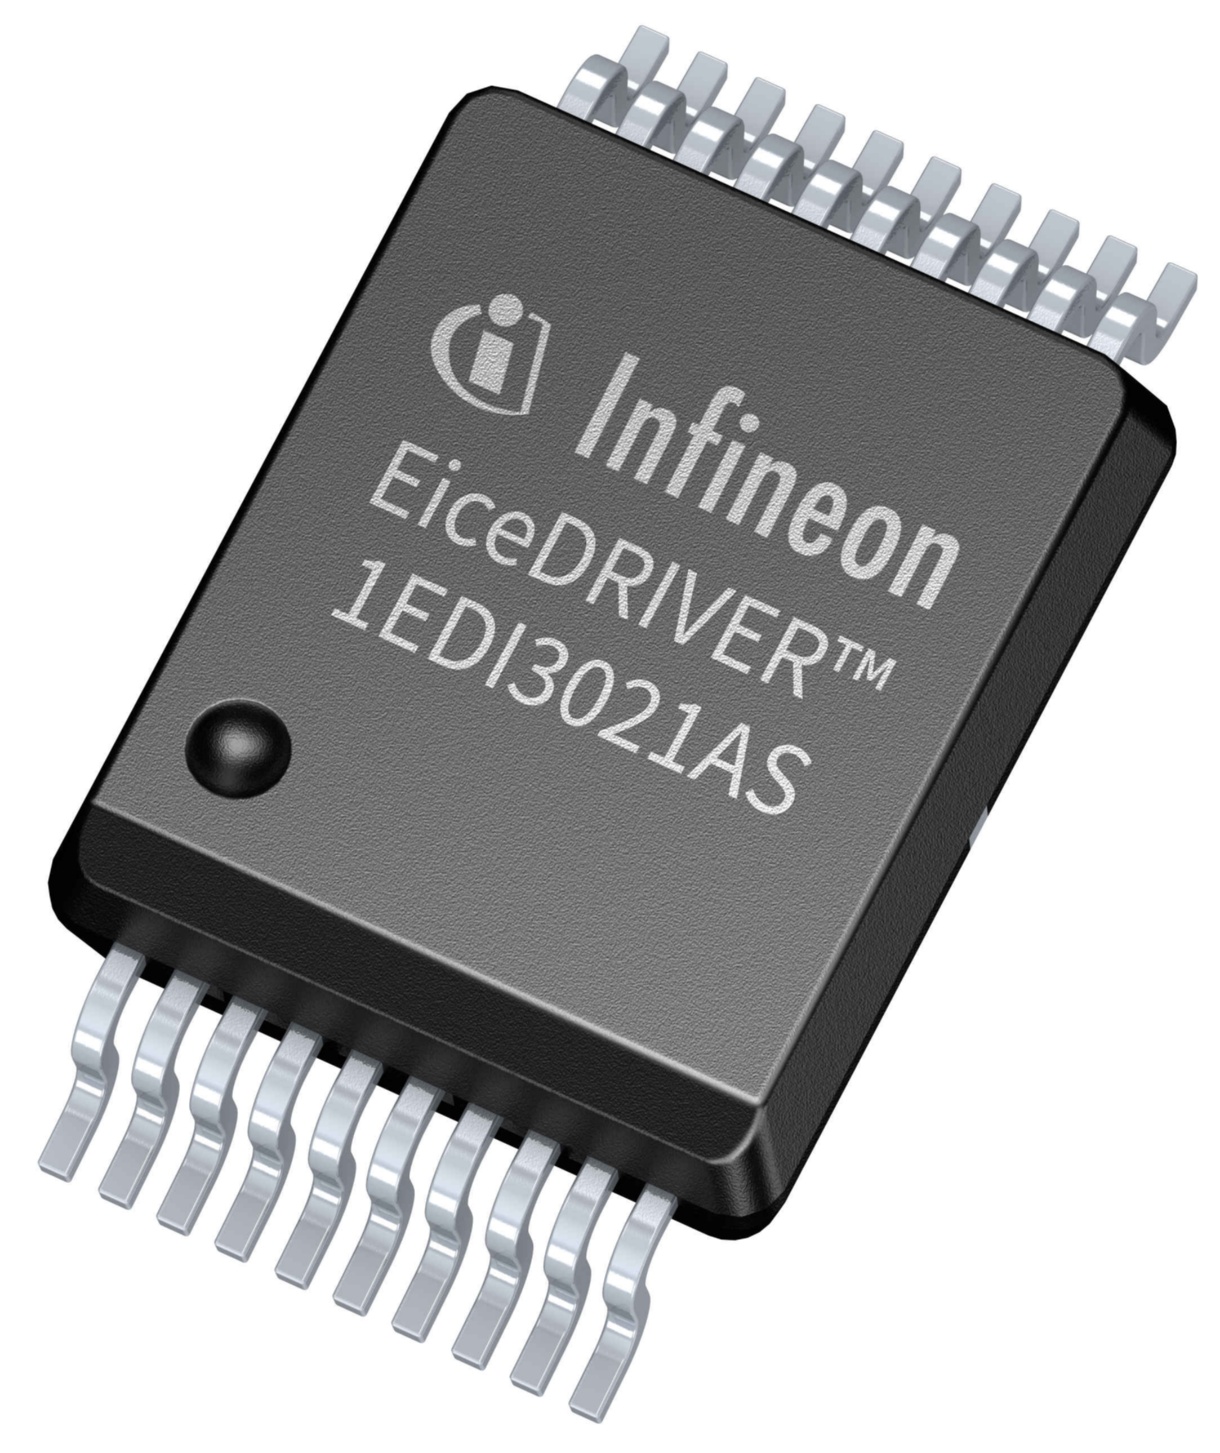 1EDI3021AS - Infineon Technologies